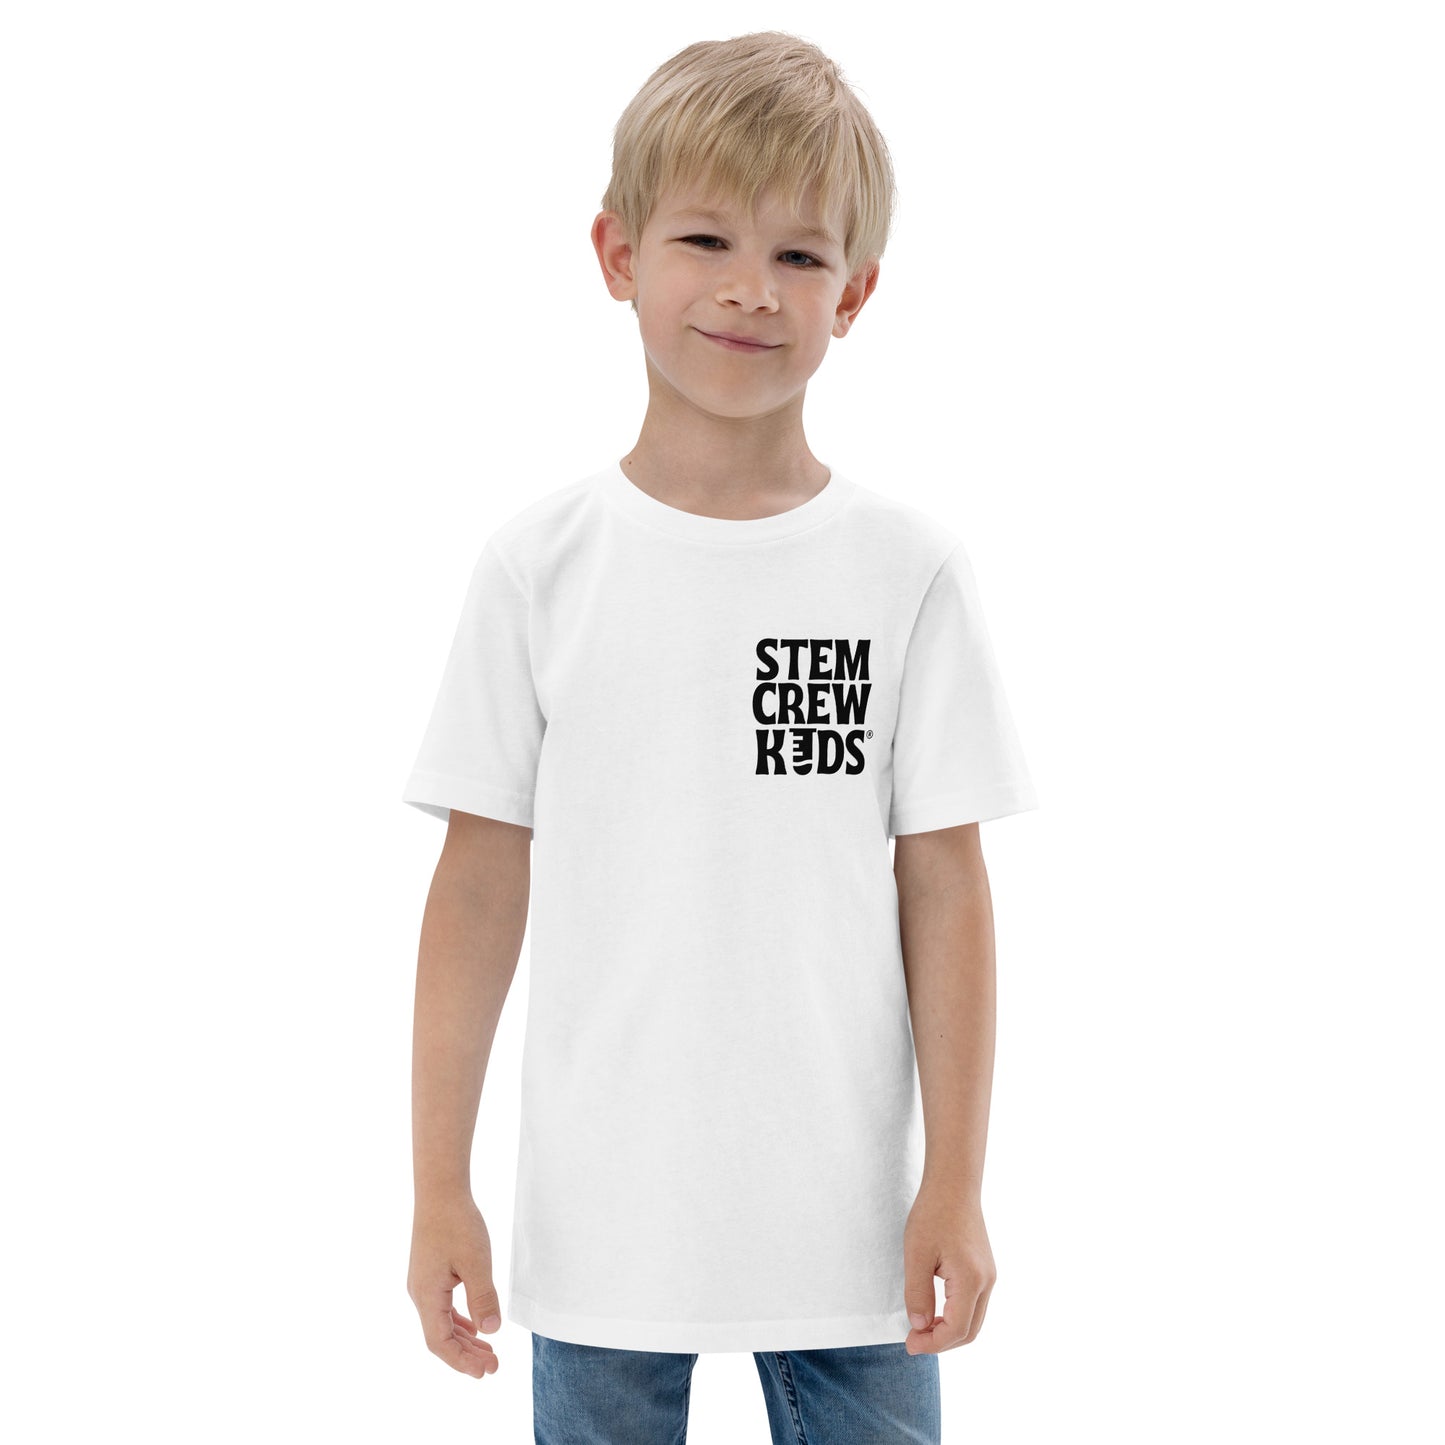 STEM Crew Kids Youth t-shirt pocket (Black/White)